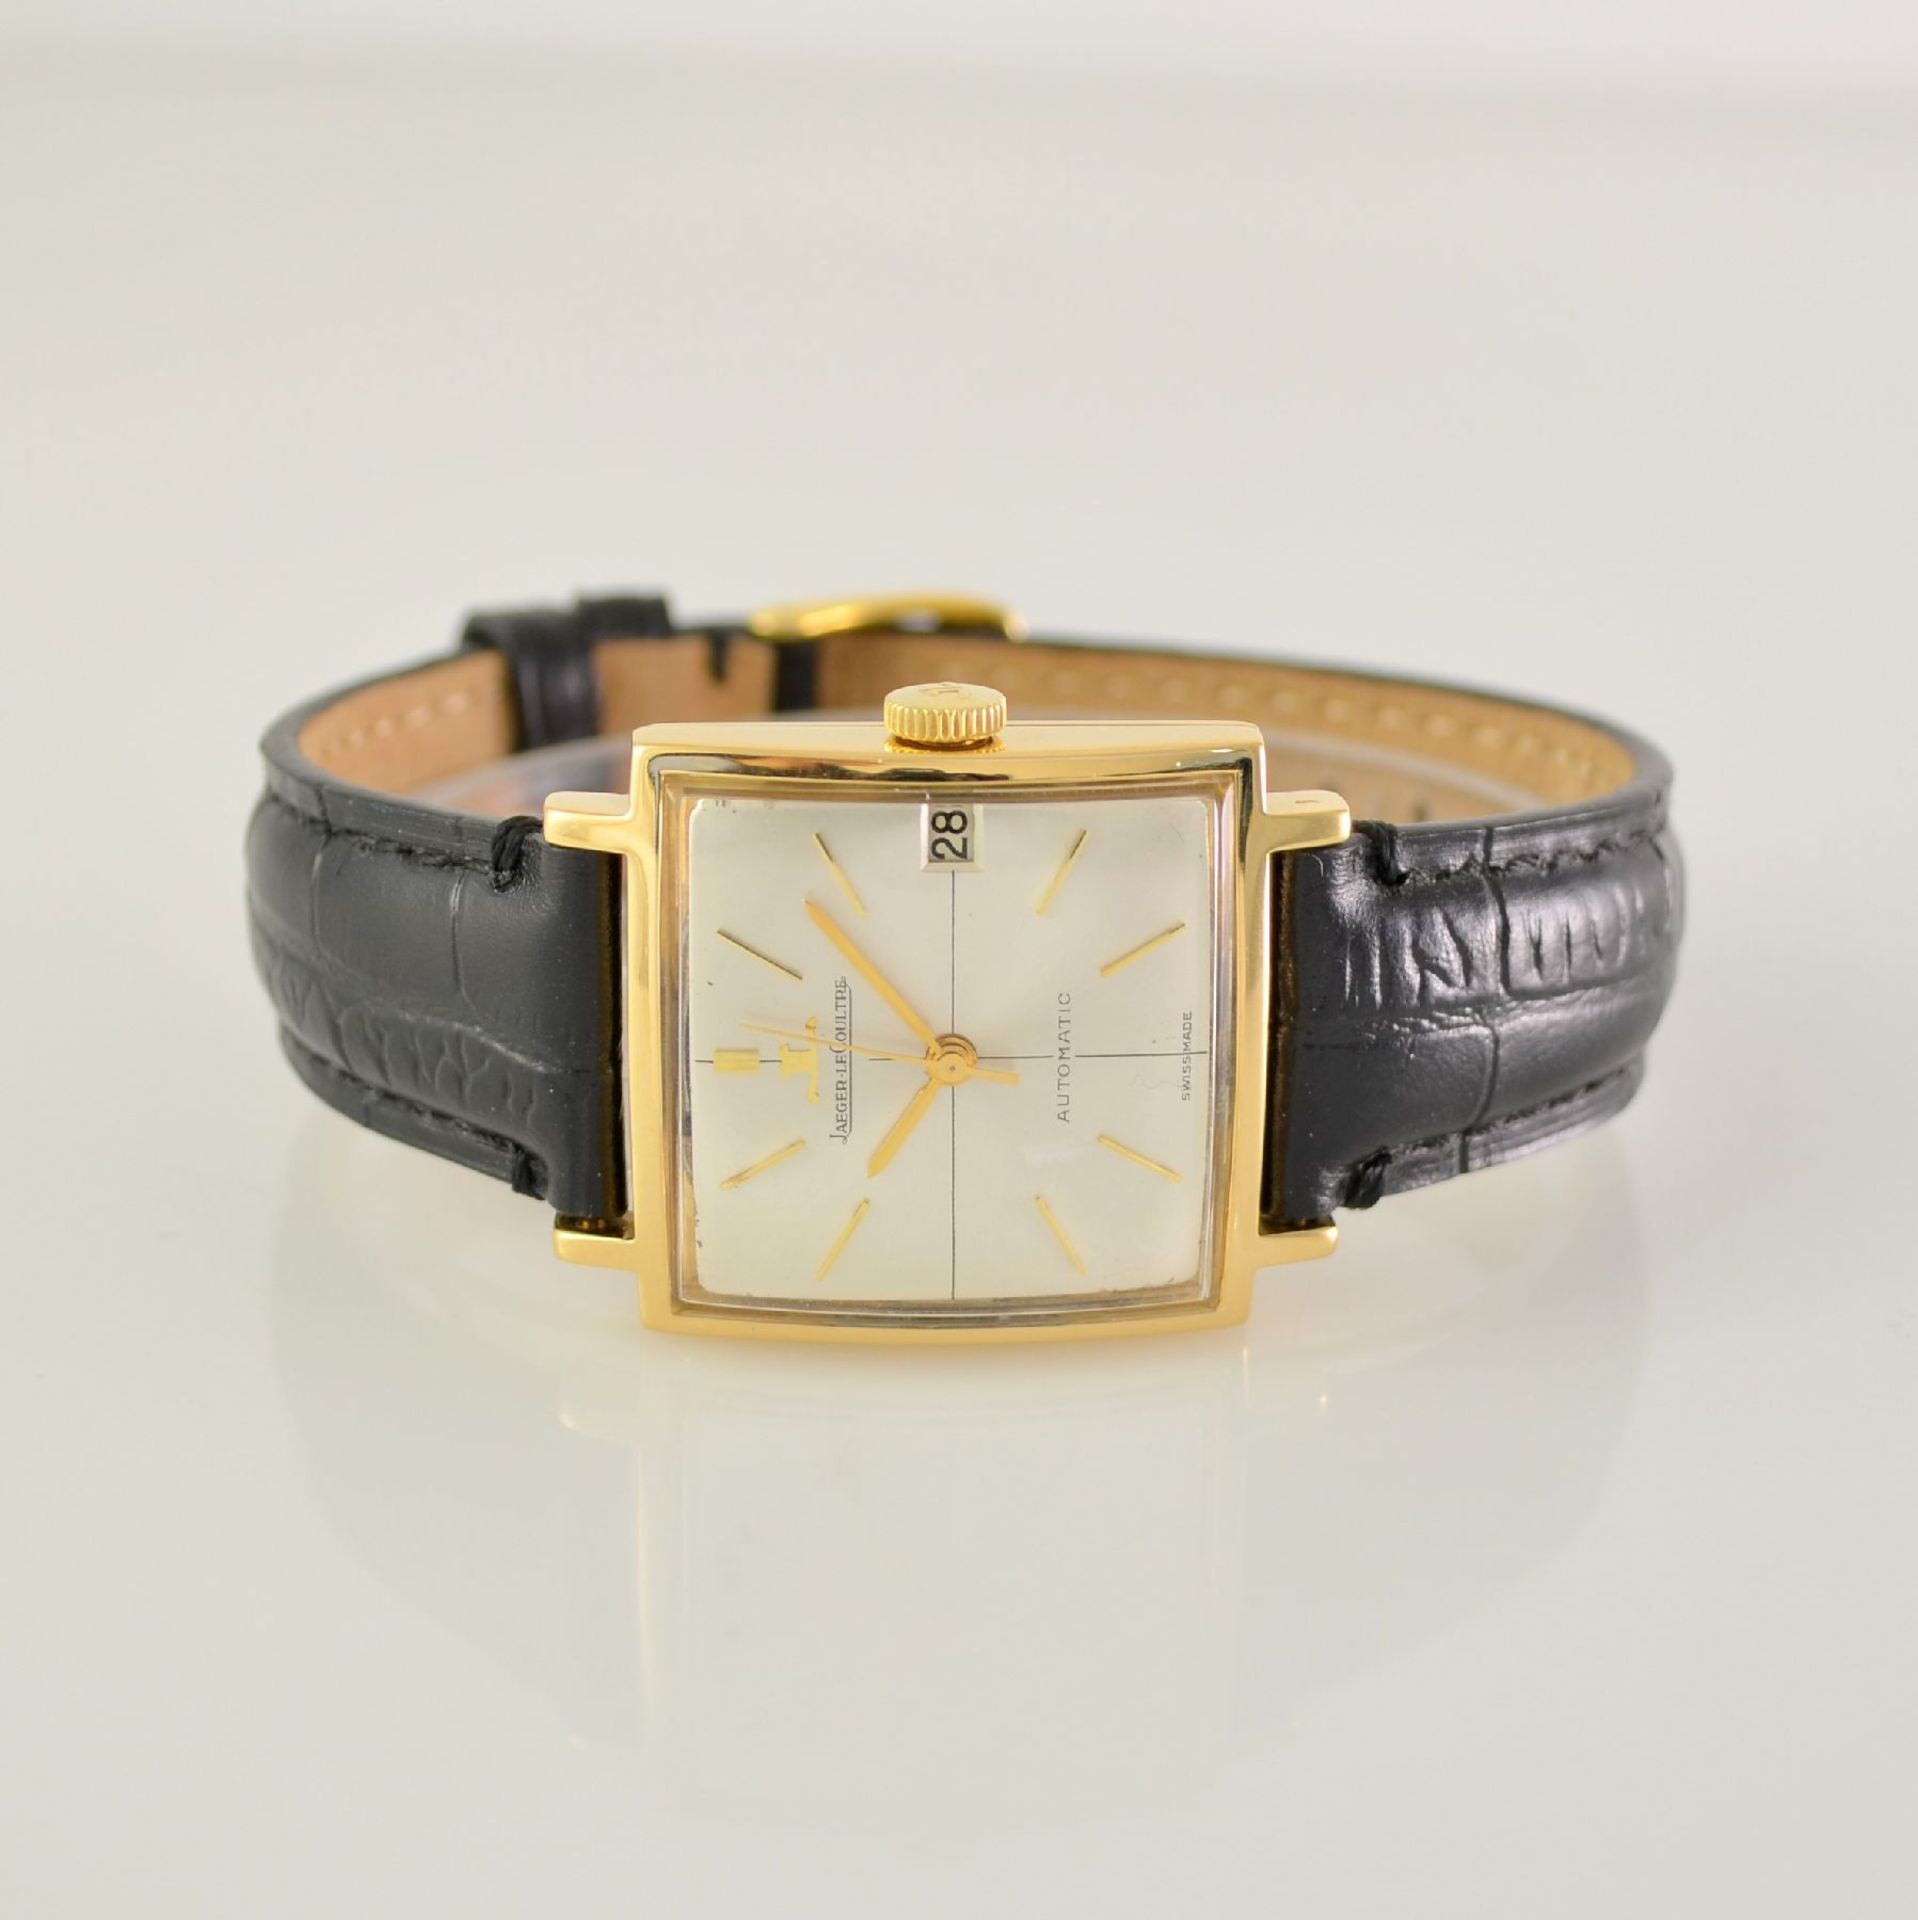 Jaeger-LeCoultre 18k yellow gold gents wristwatch, Switzerland around 1965, self winding, two-